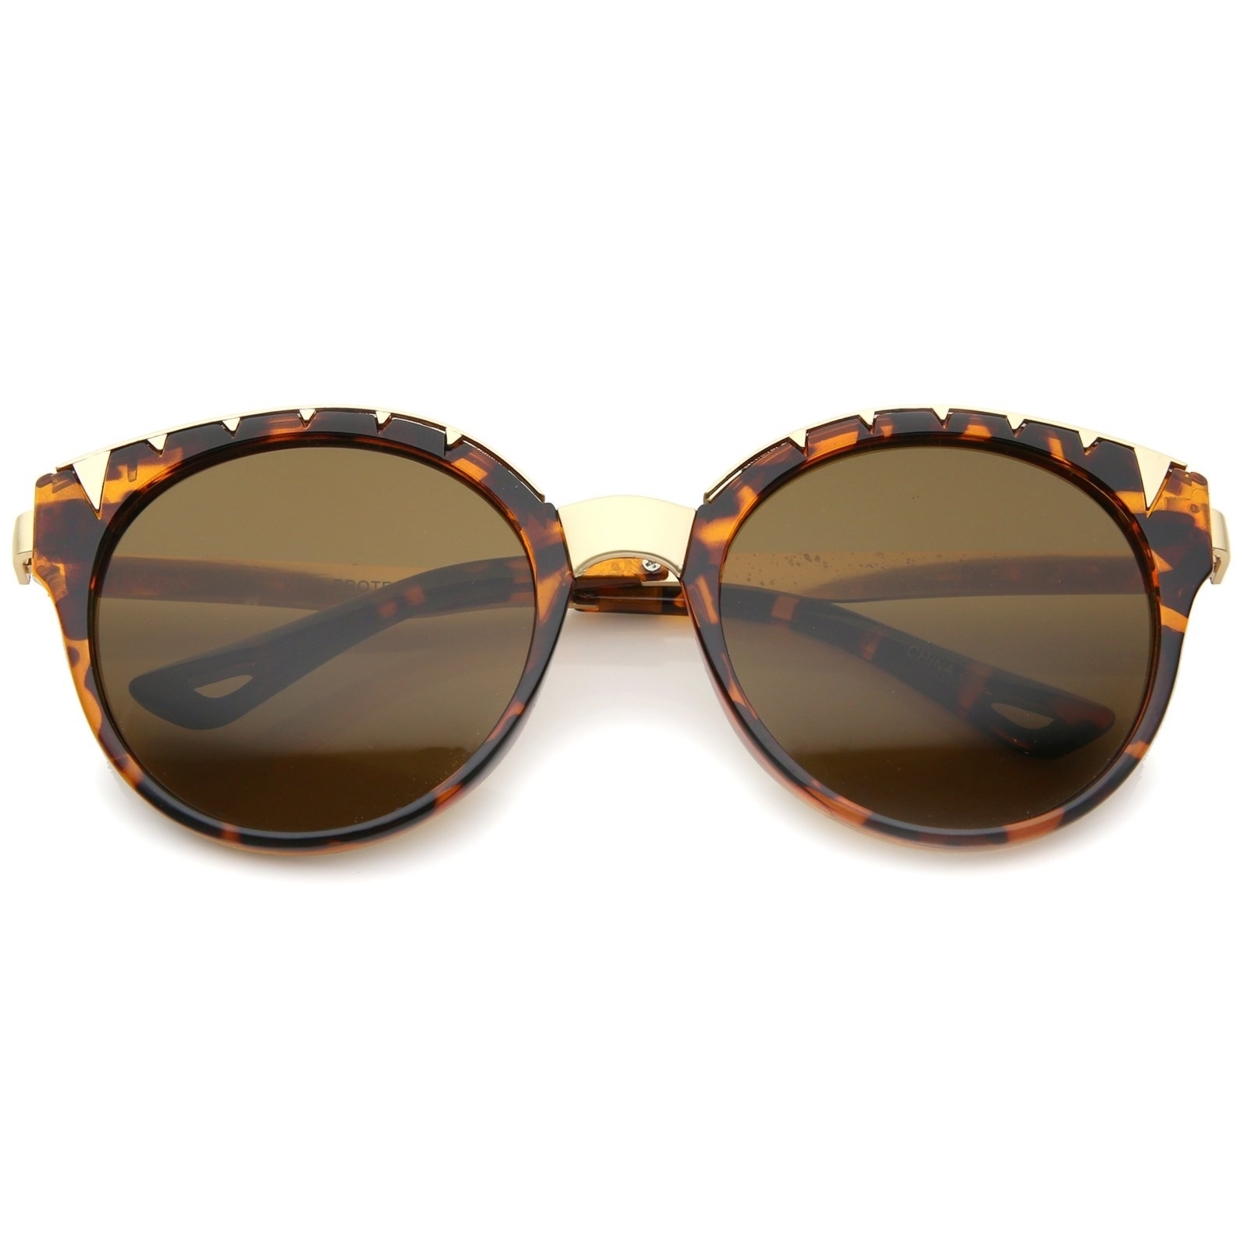 Women's Oversize Triangle Detail Round Cat Eye Sunglasses 55mm - Black-Gold / Lavender